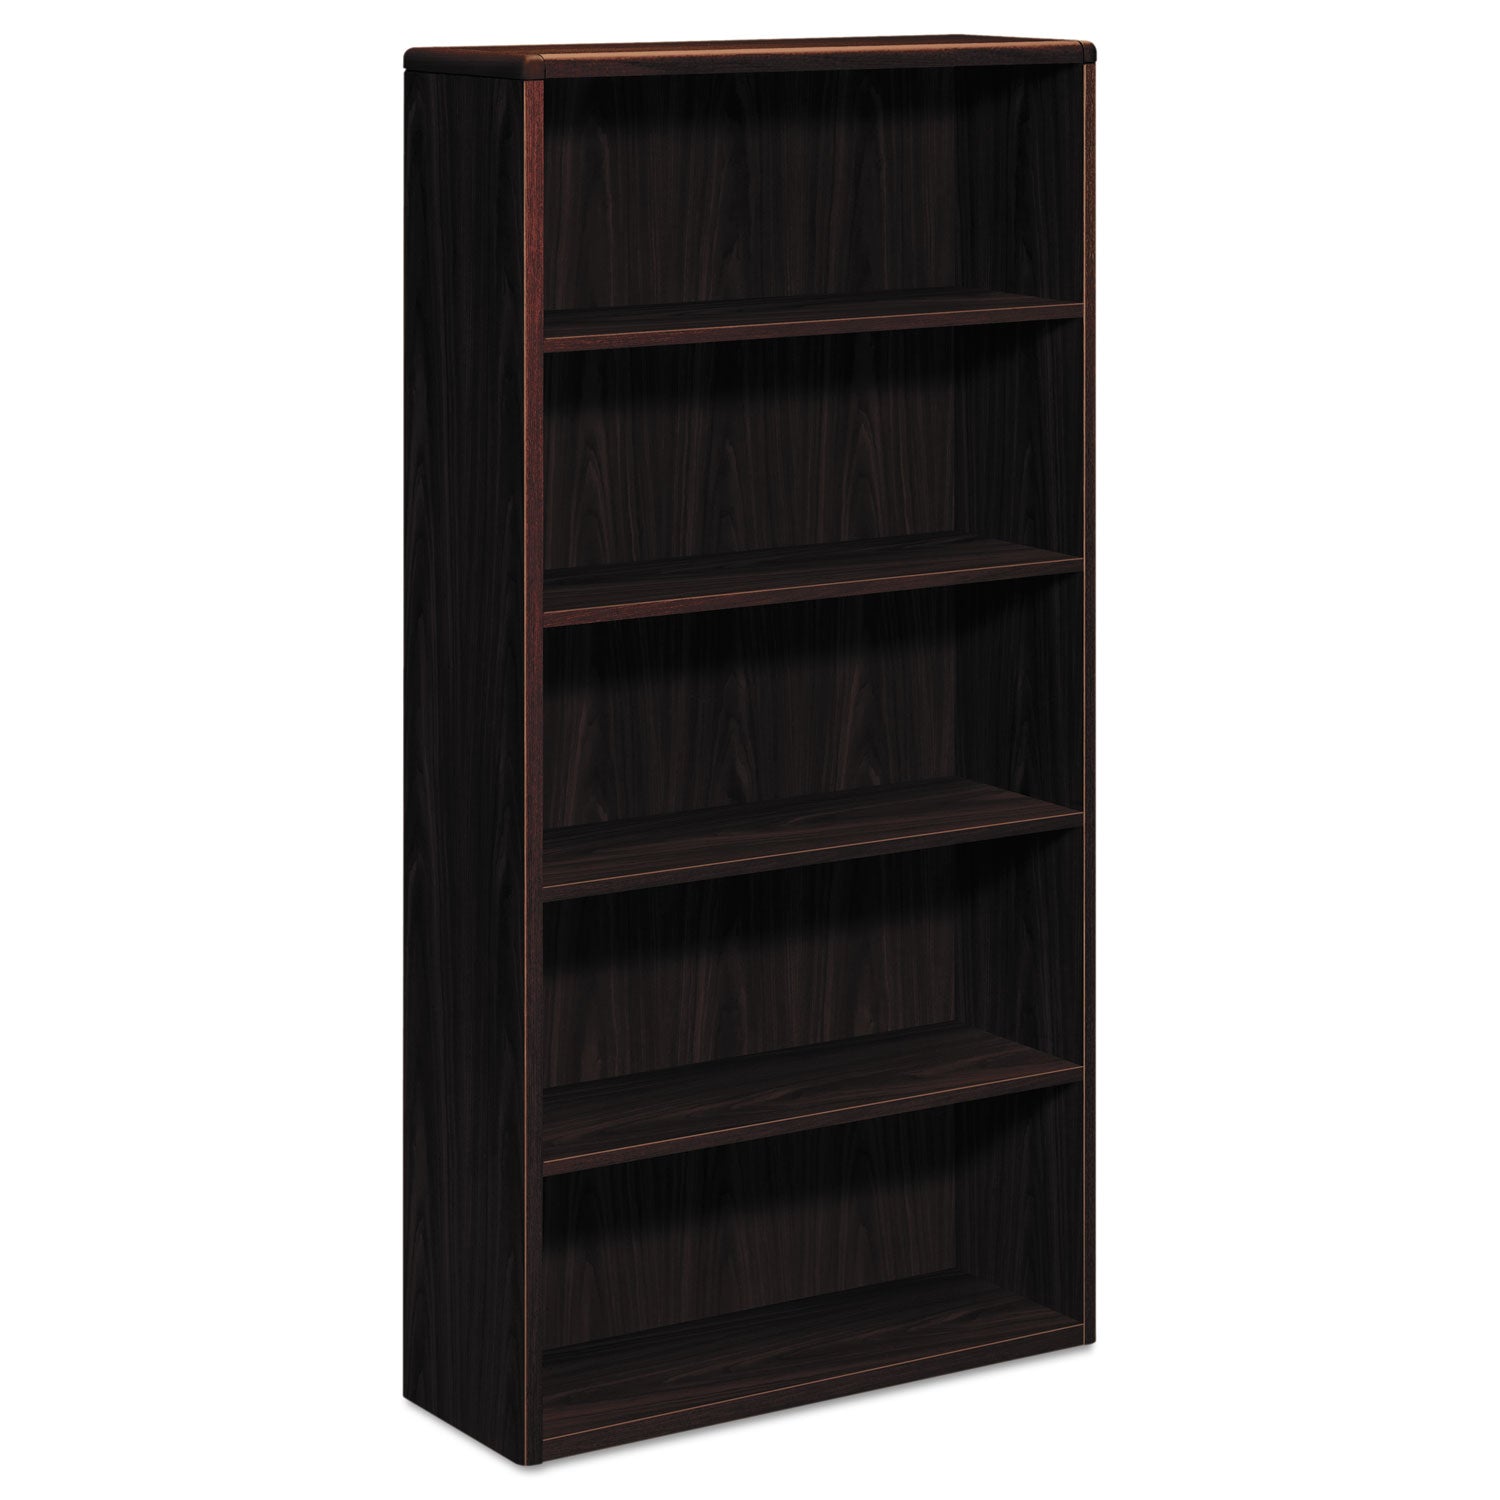 10700 Series Wood Bookcase, Five-Shelf, 36w x 13.13d x 71h, Mahogany - 